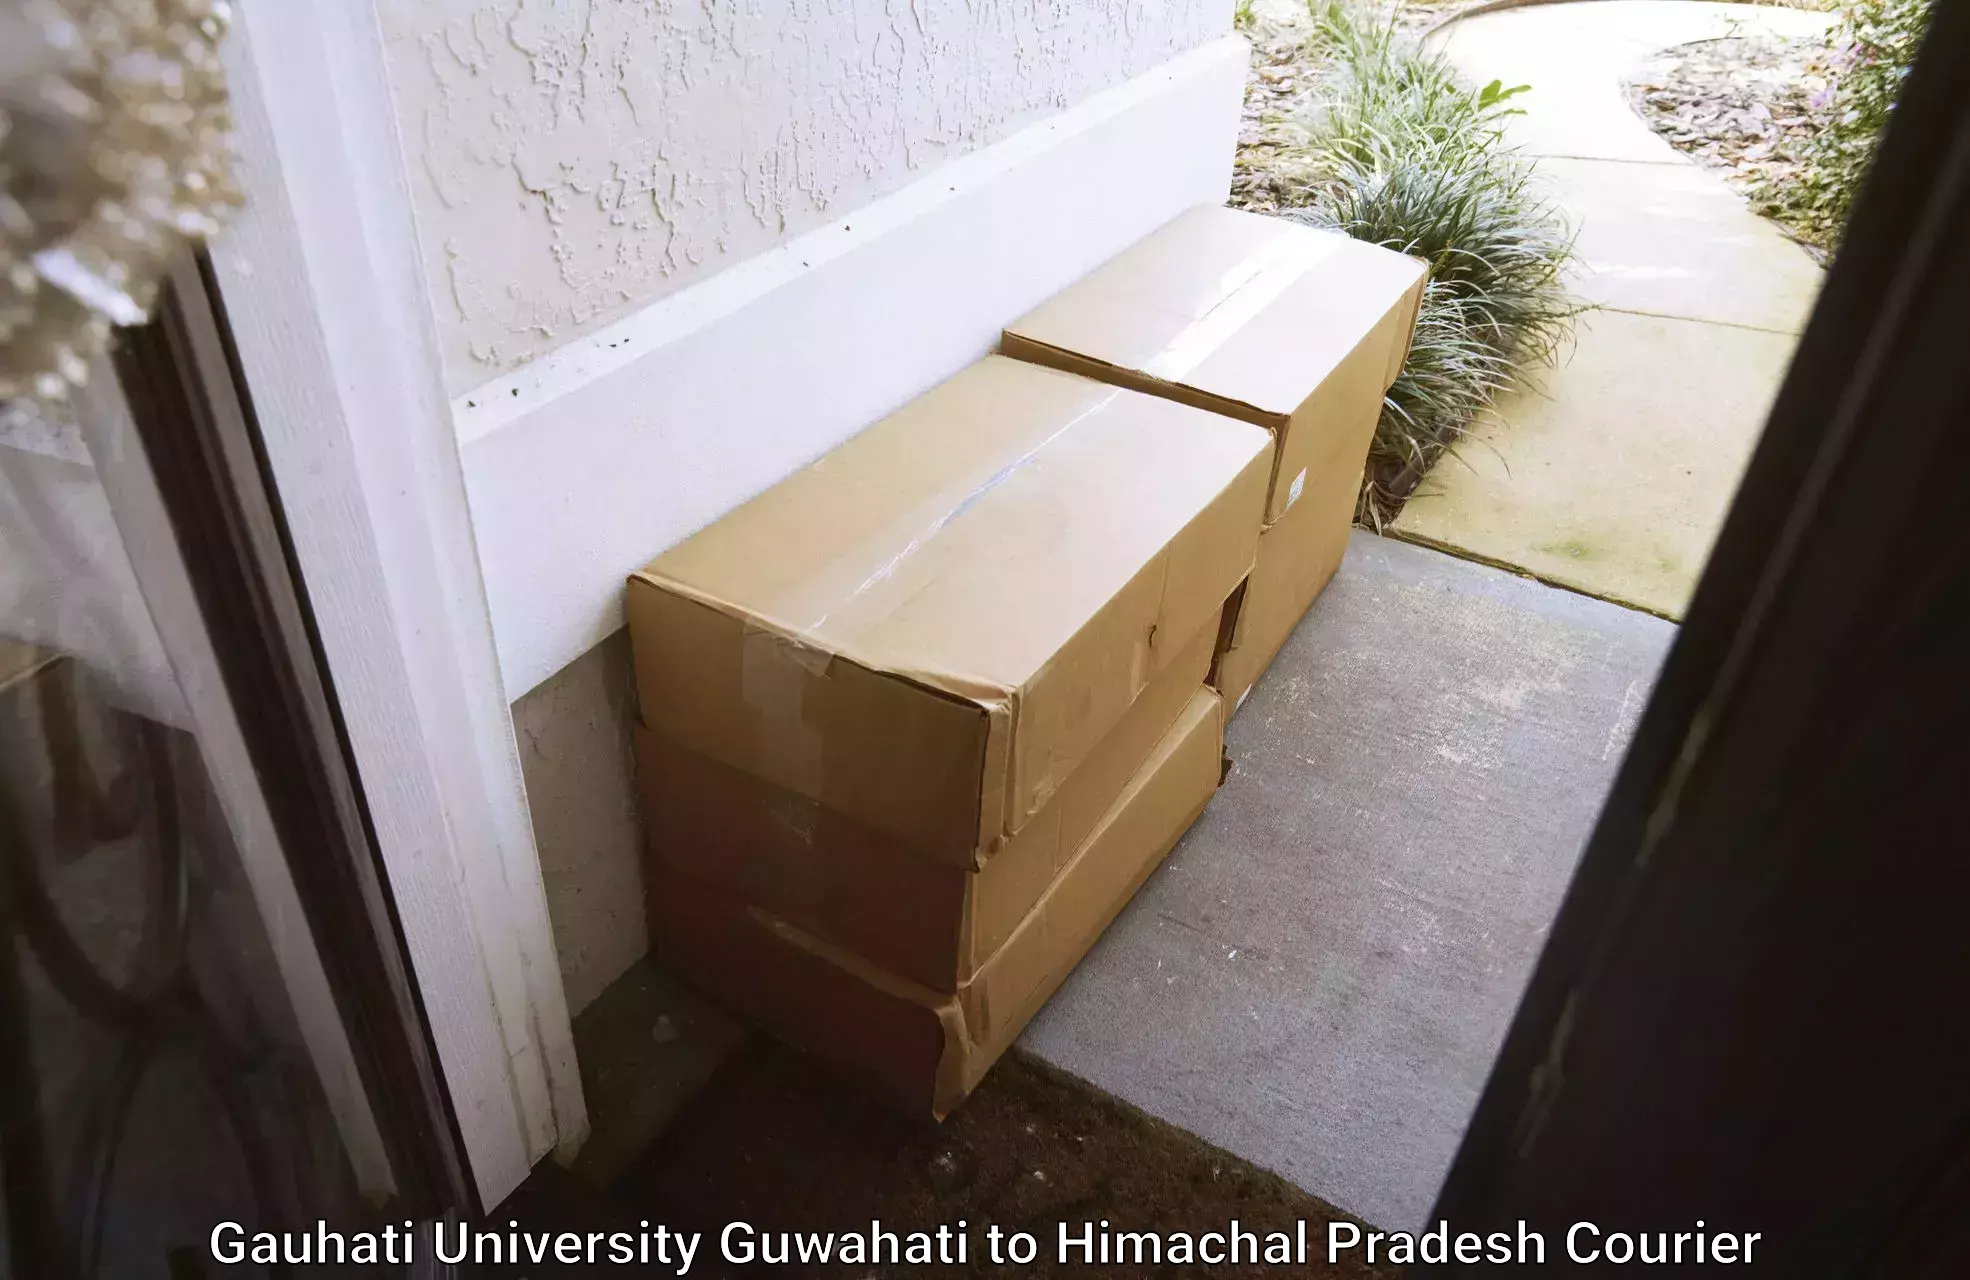 Modern delivery methods in Gauhati University Guwahati to Himachal Pradesh